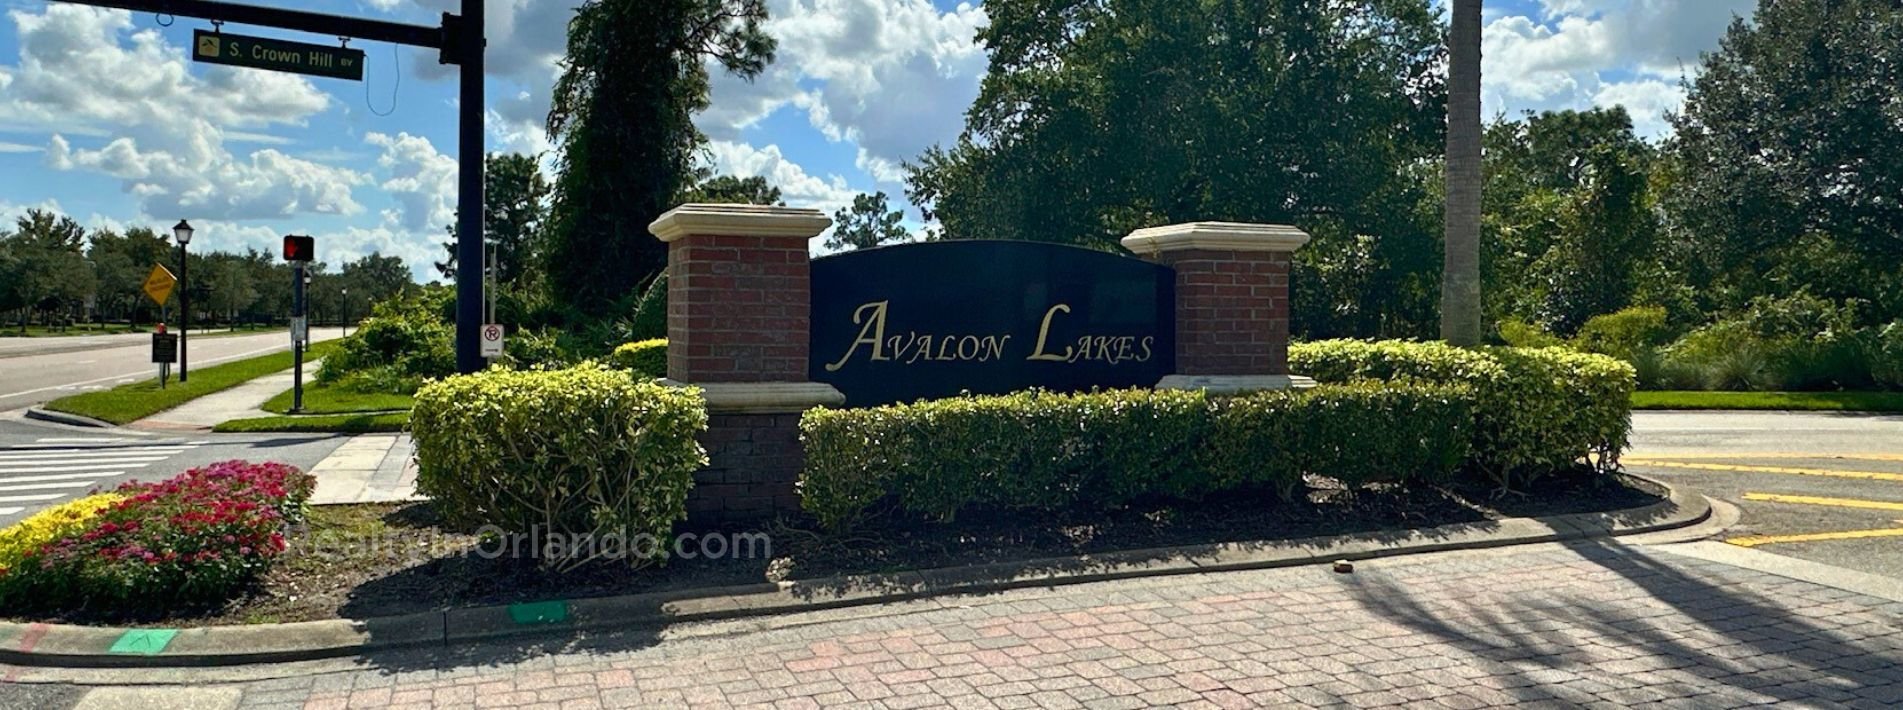 Avalon Lakes East Orlando Real Estate